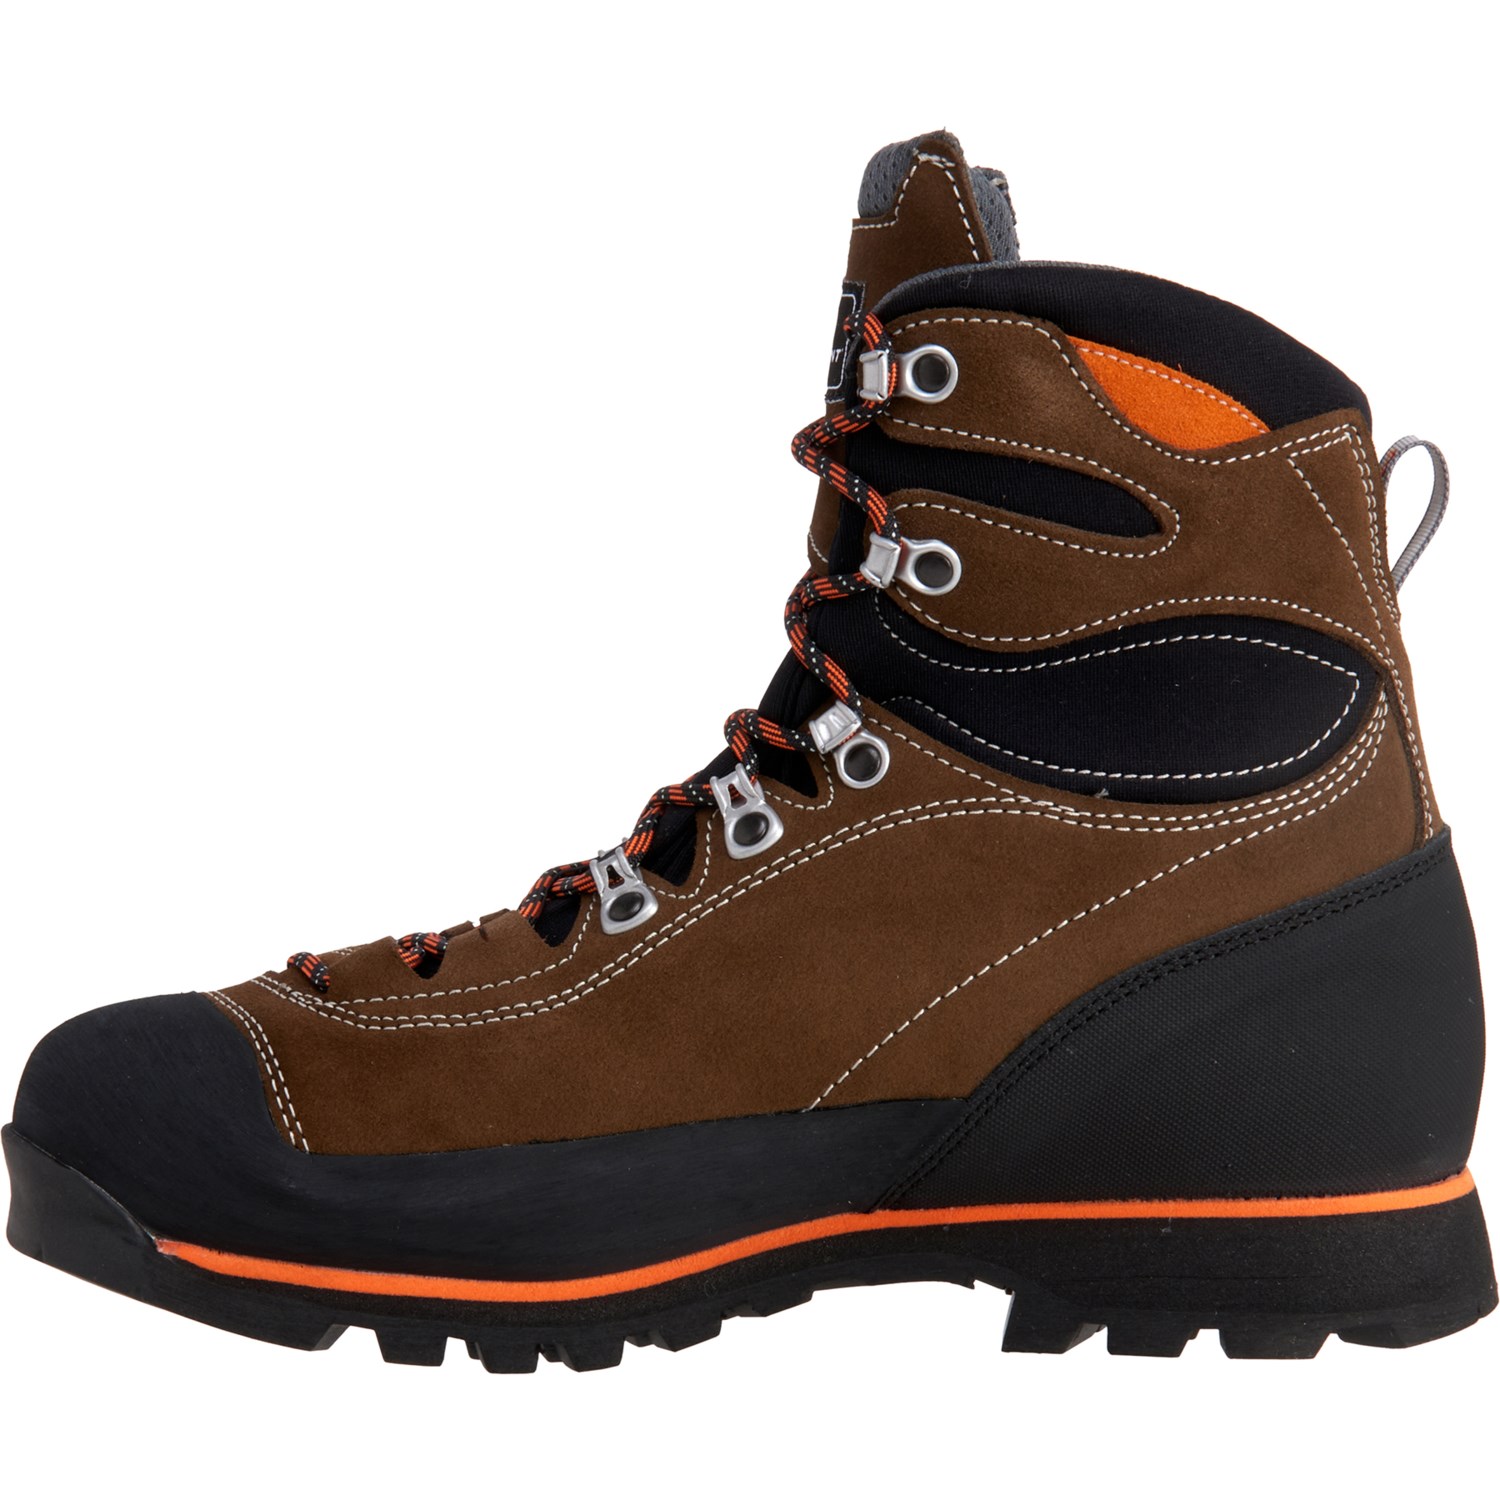 Garmont Tower Trek Gore-Tex® Hiking Boots (For Men) - Save 56%